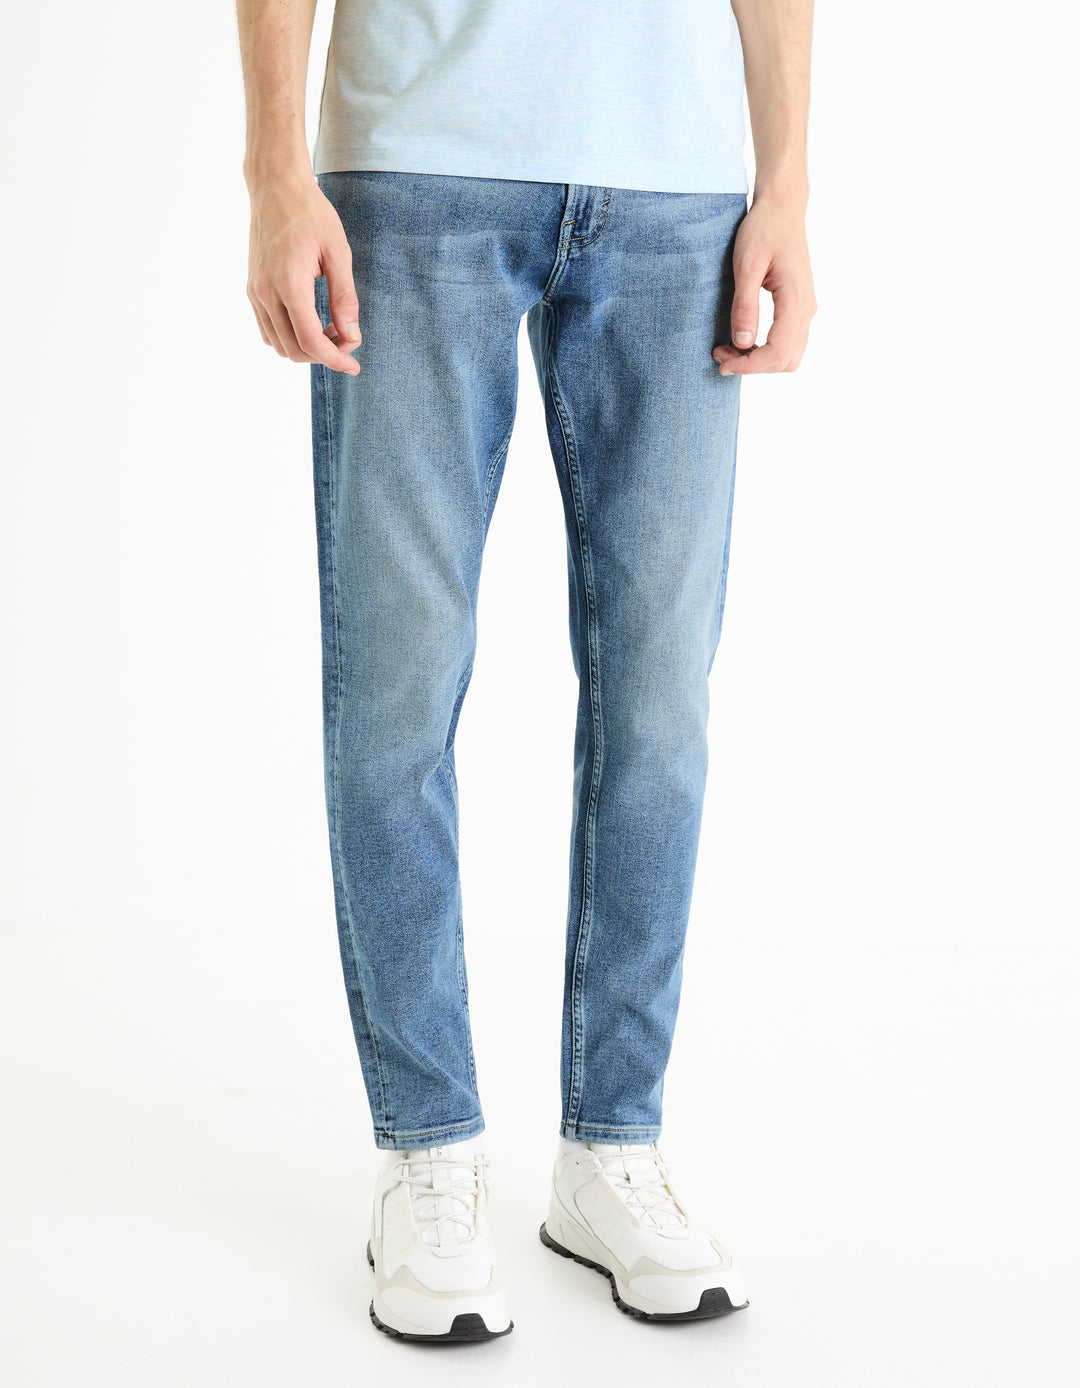 C25 slim jeans 3 lengths